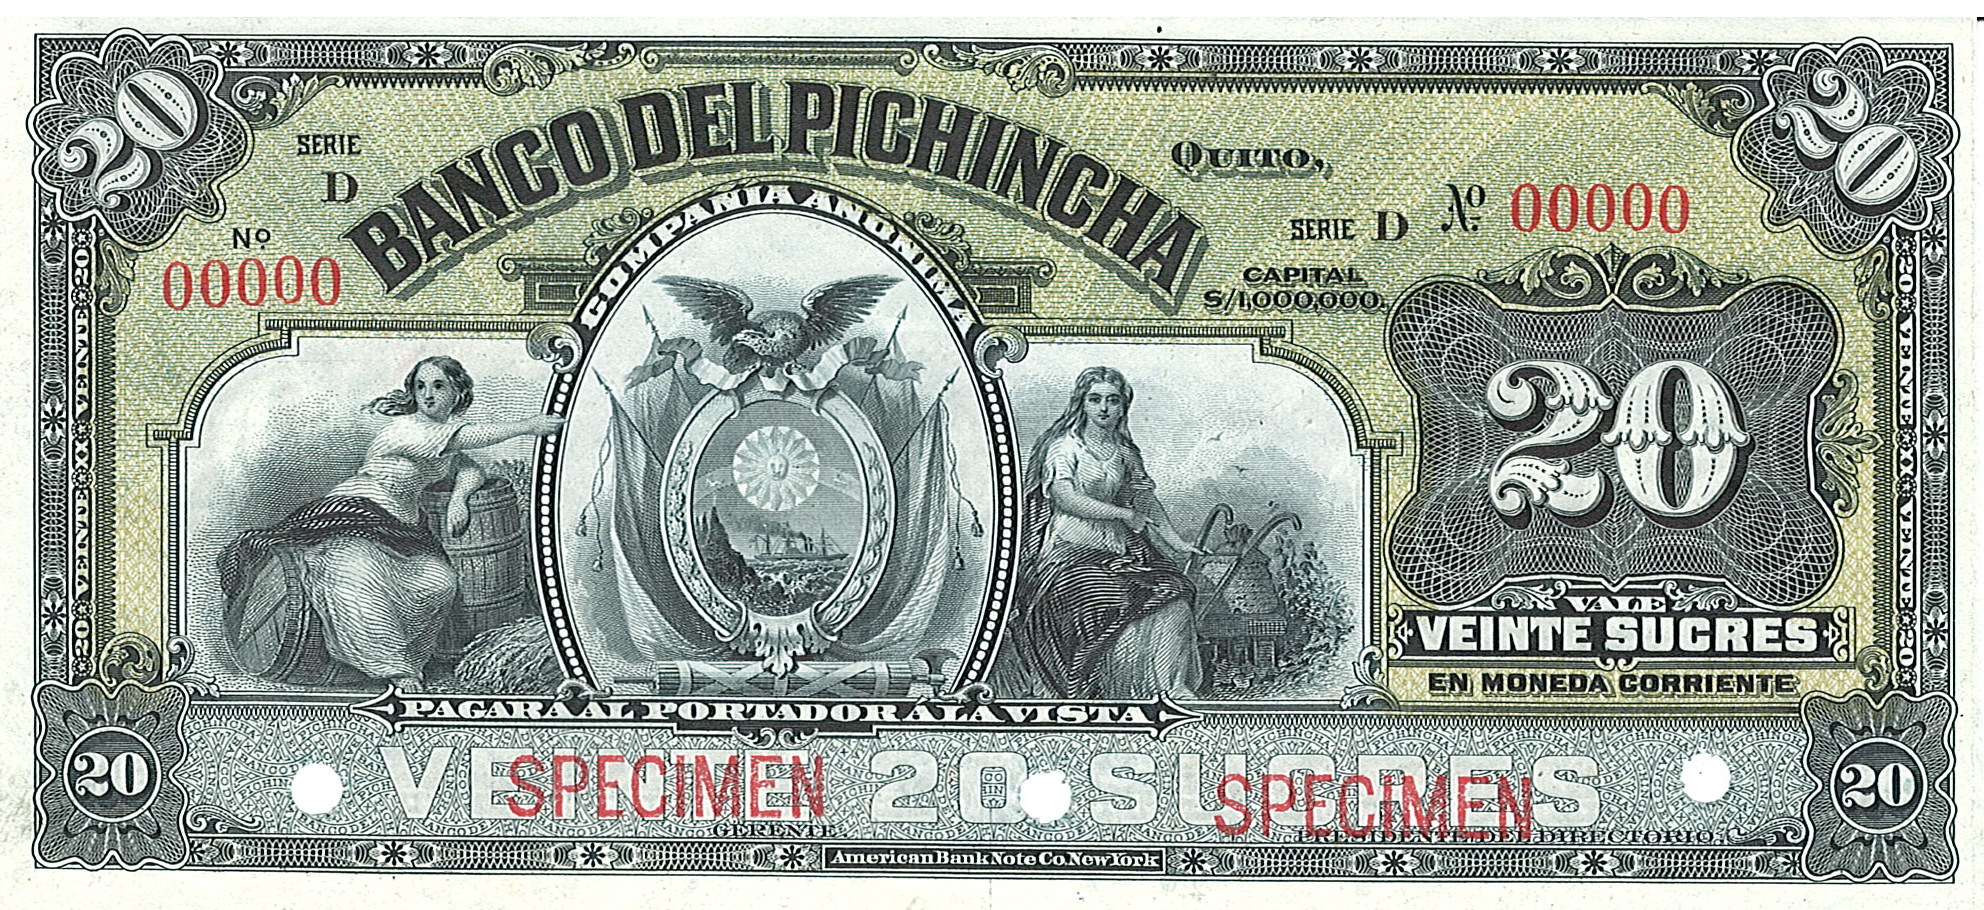 Banco Del Pichincha, 20 Sucres, Эквадор